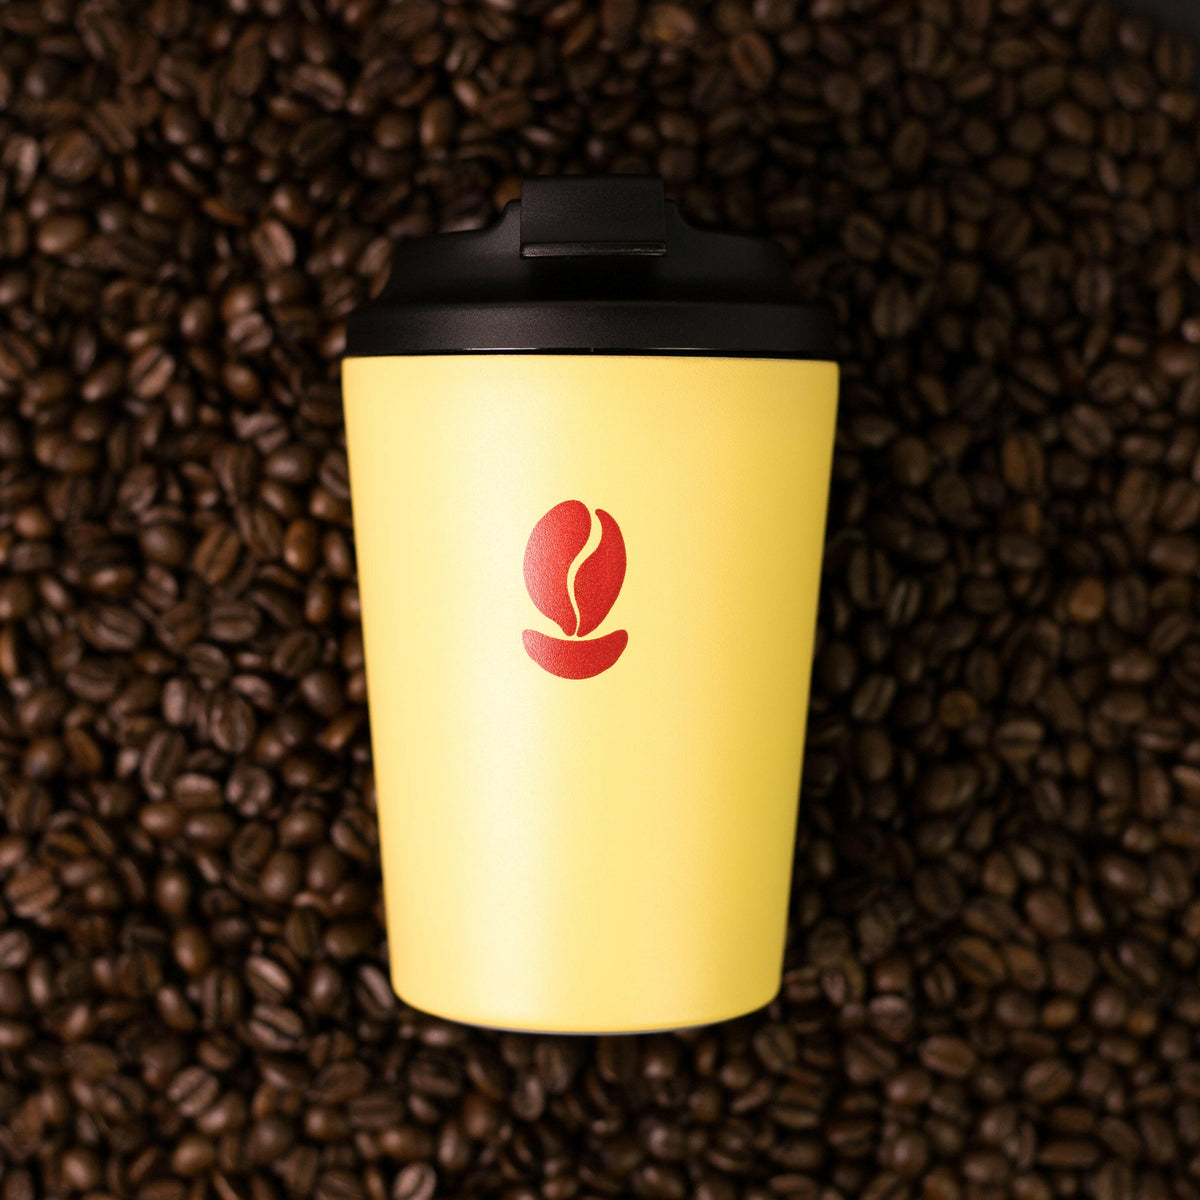 Sense Coffee Cup